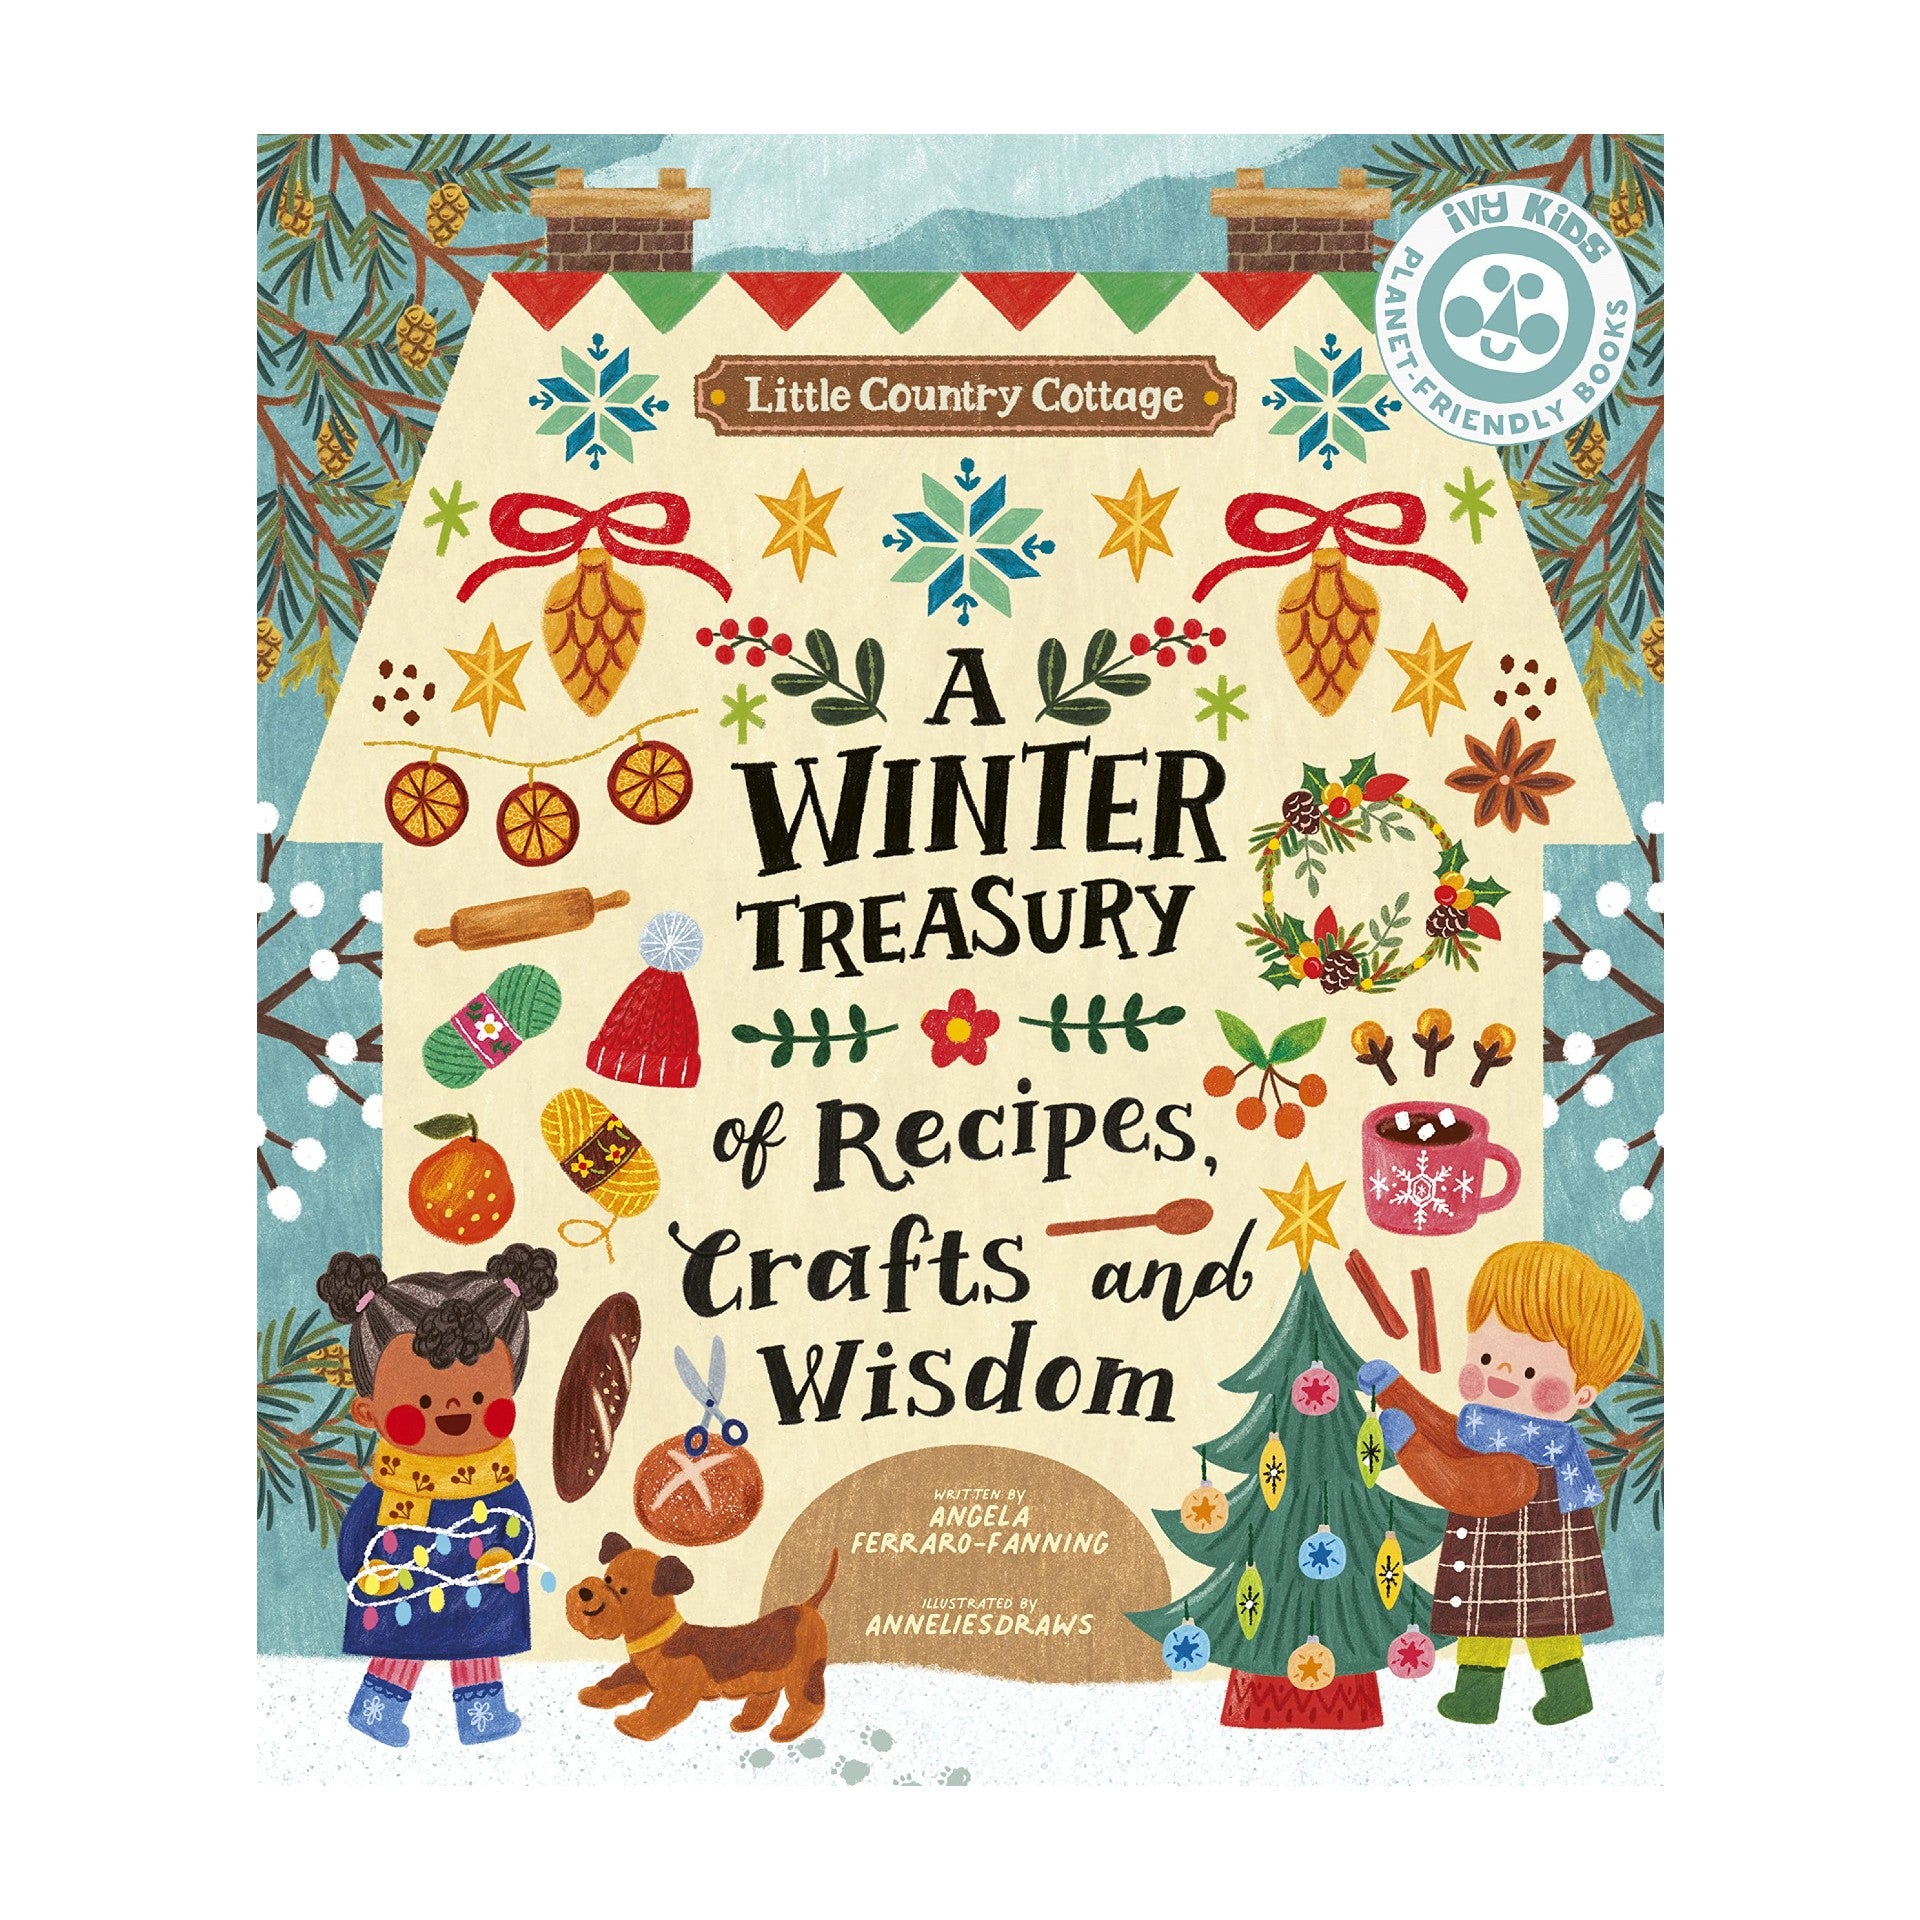 A Winter Treasury of Recipes, Crafts, and Wisdom